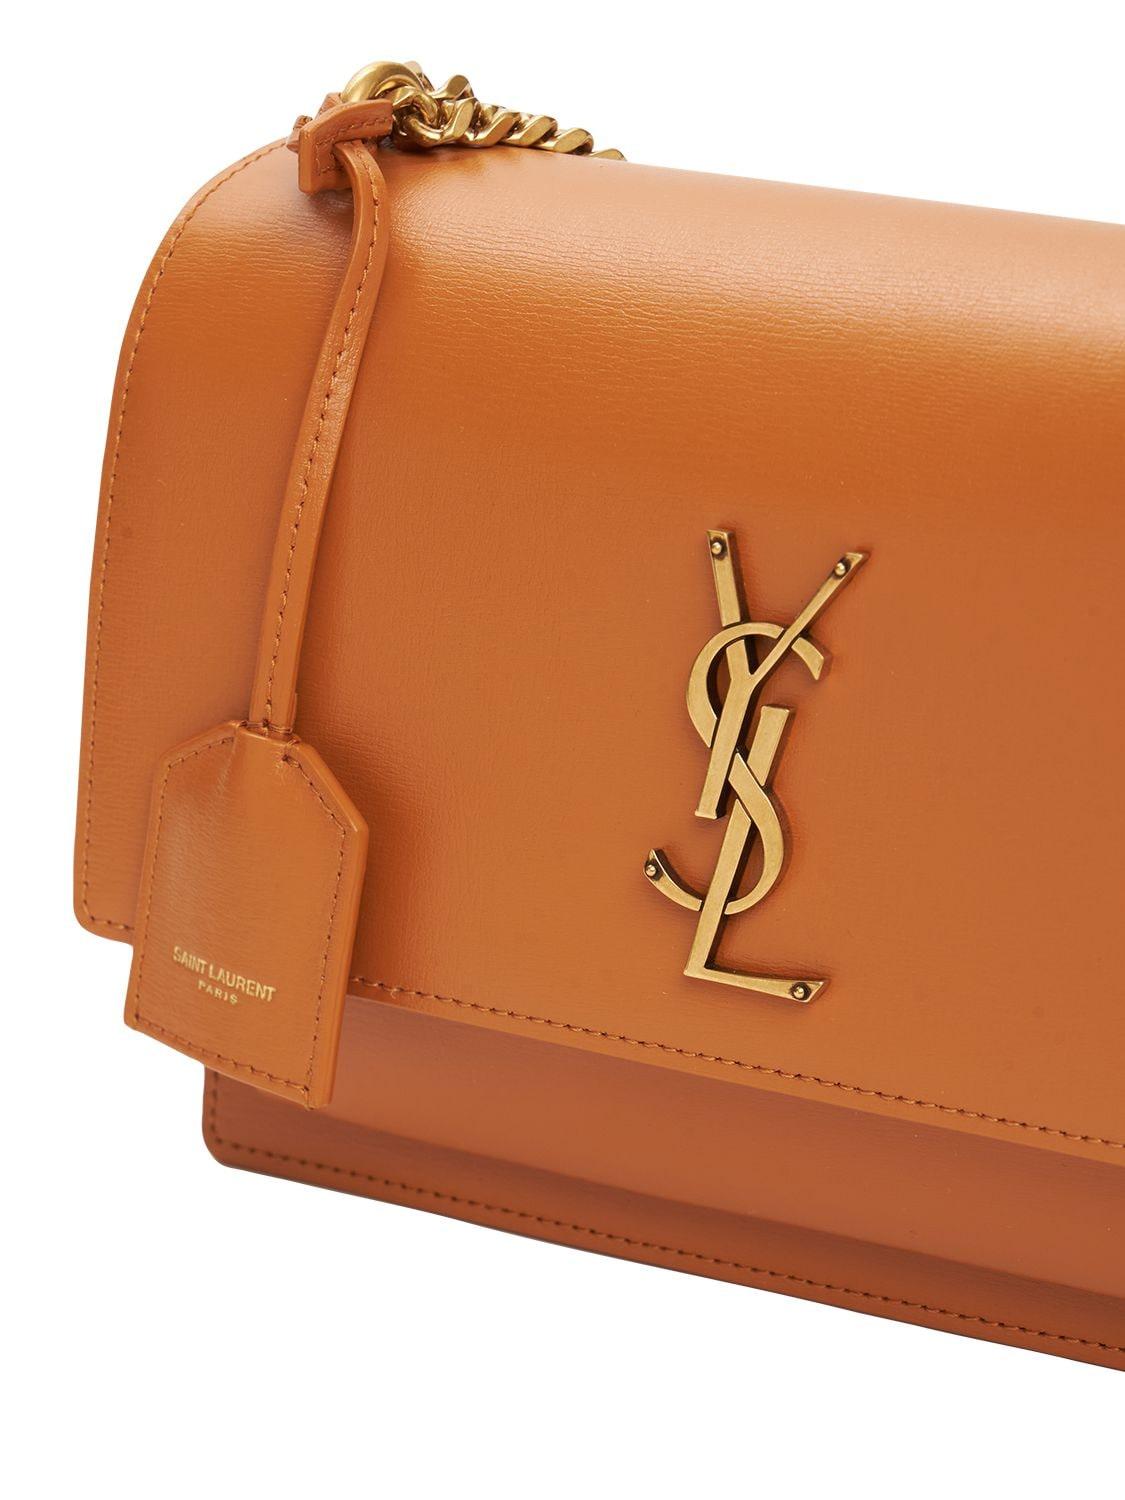 Yves Saint Laurent Sunset Medium Leather Shoulder Bag